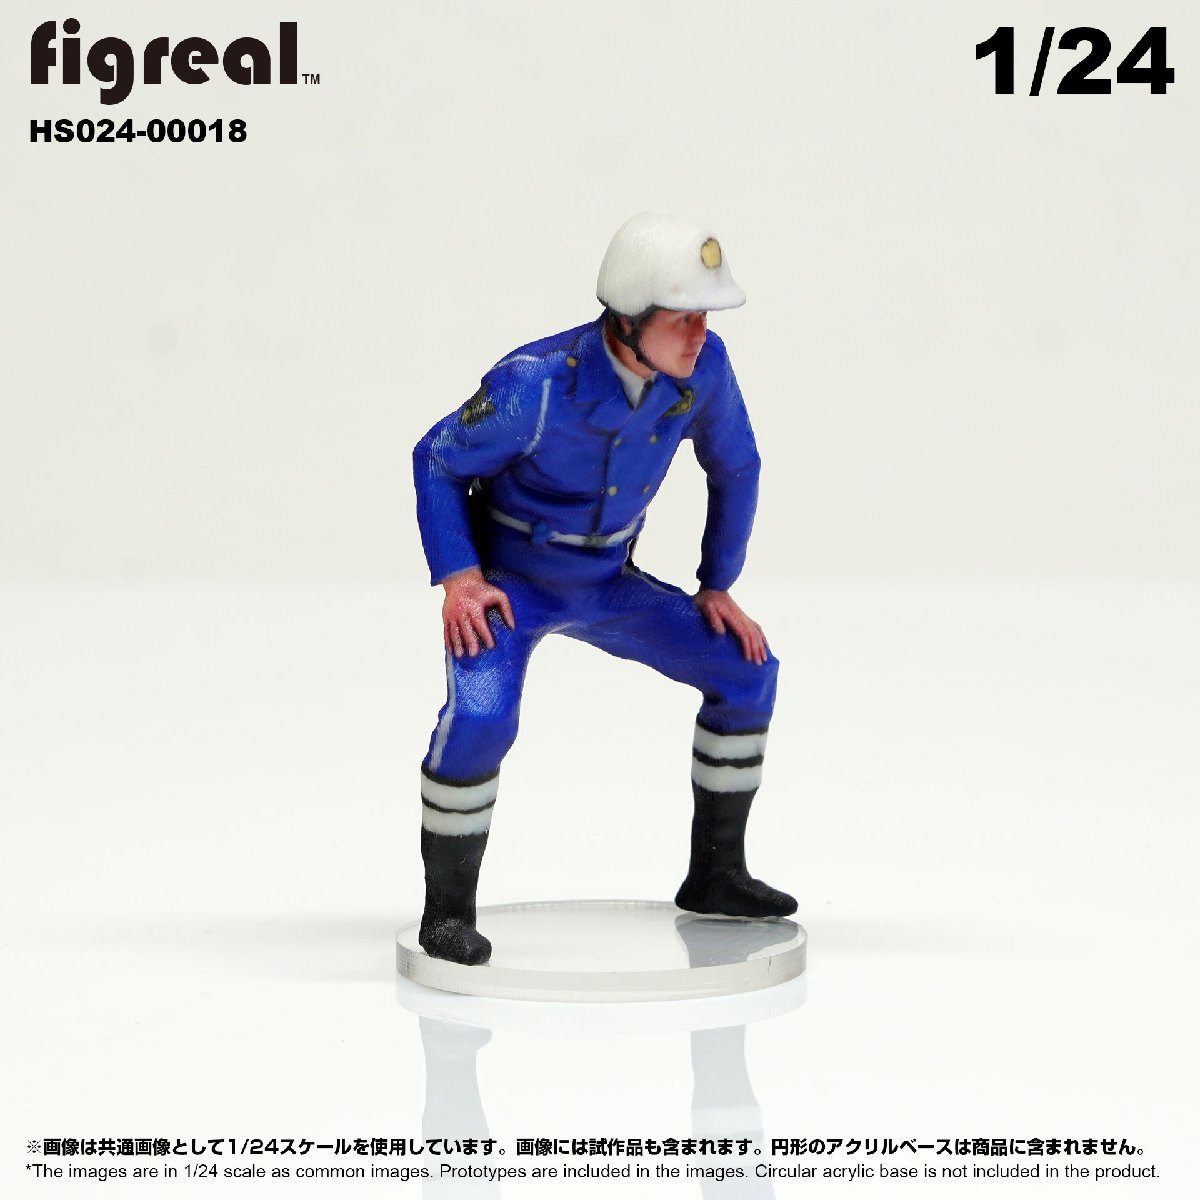 HS024-00018 figreal 日本交通機動隊 1/24 高精細フィギュア_画像2